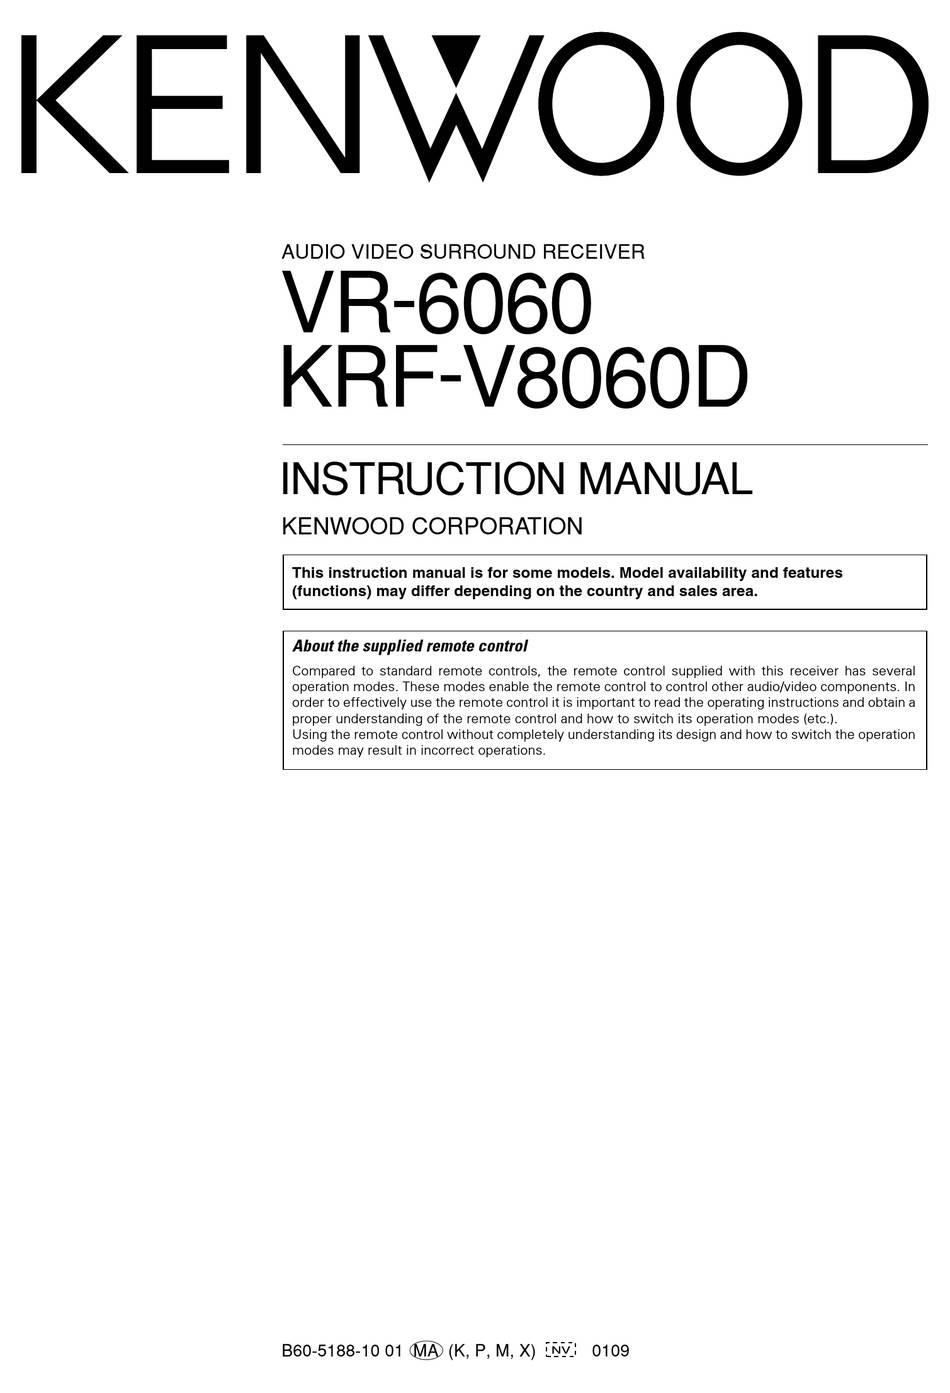 Kenwood KRF-V8060D